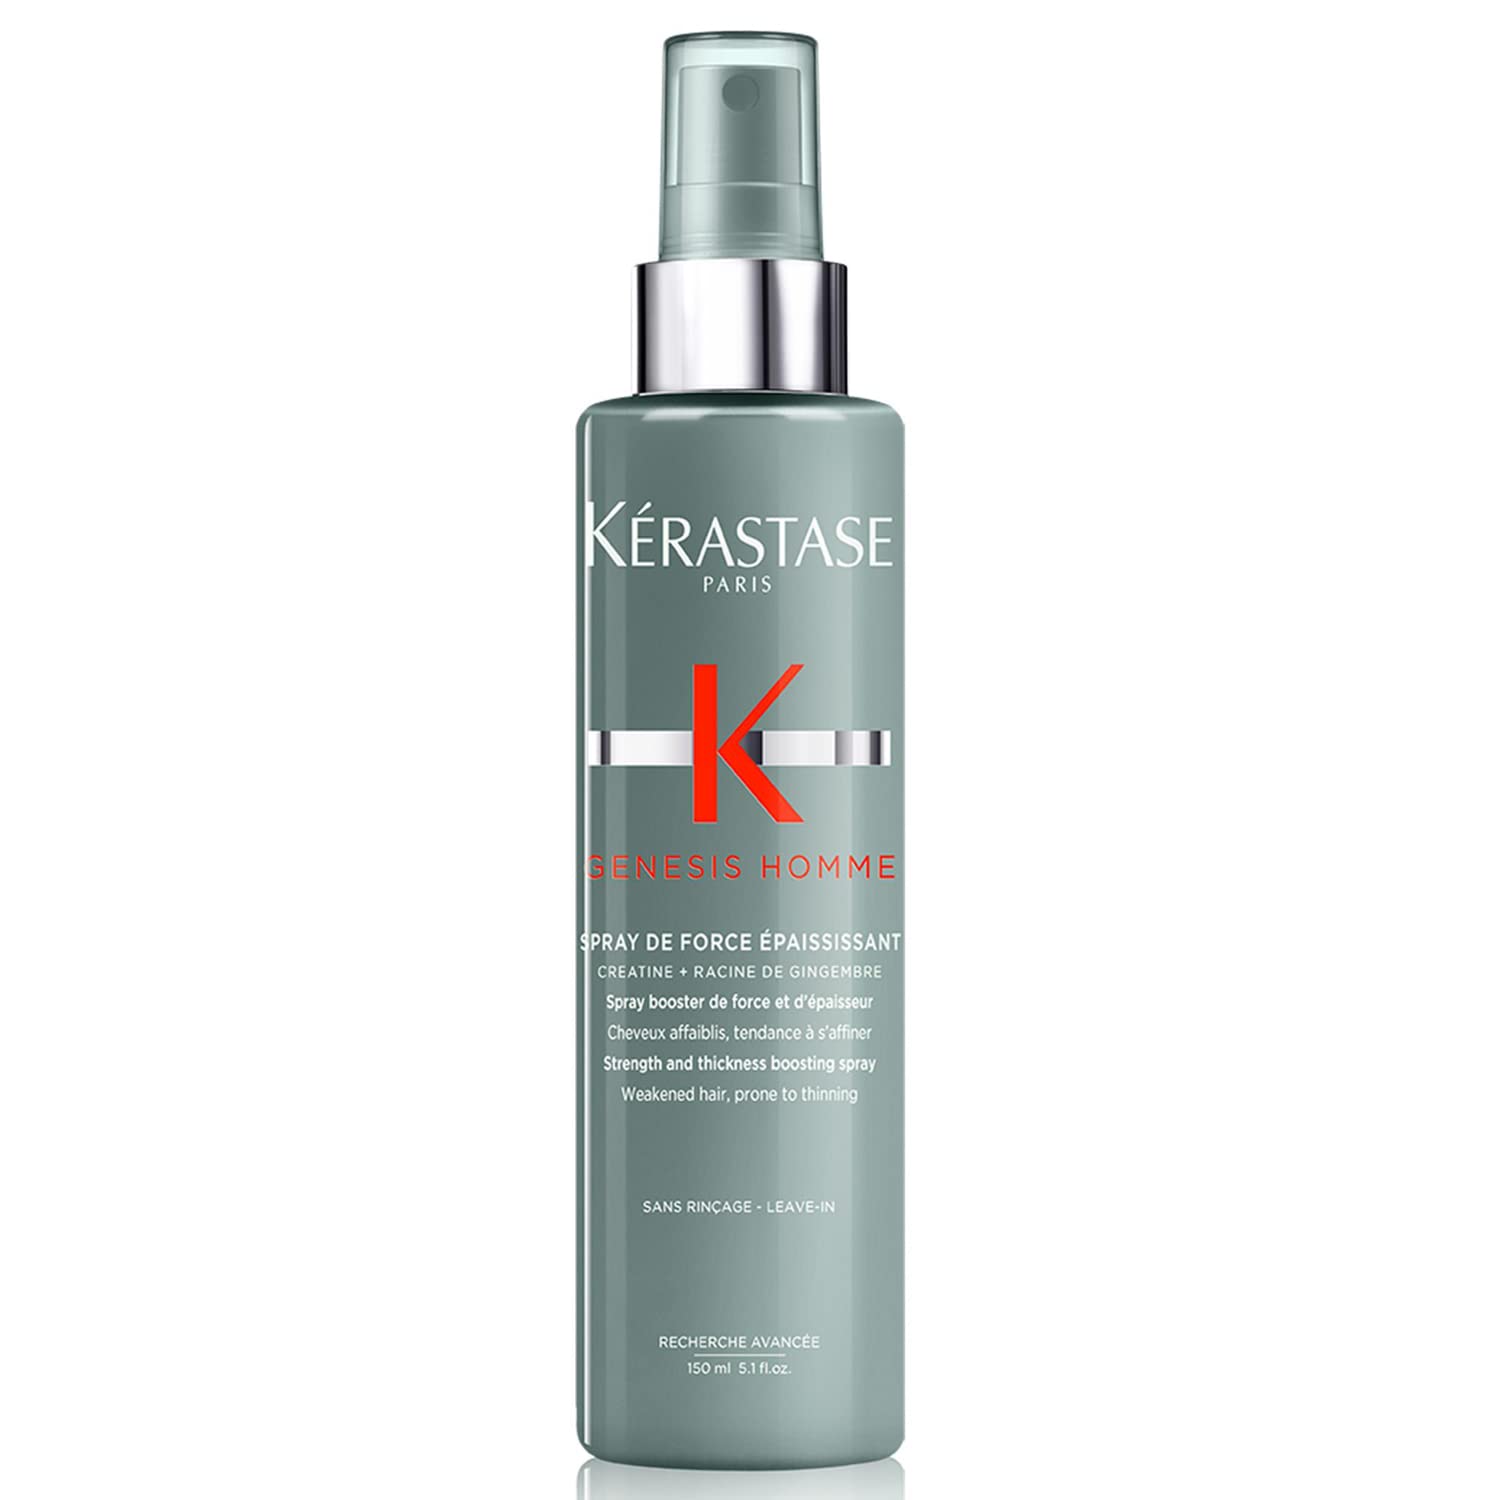 Loreal Professionnel Kérastase | Genesis Homme Volumizing Styling Spray for Weakened and Thinned Hair, Spray de Force Épaissant, 150 ml